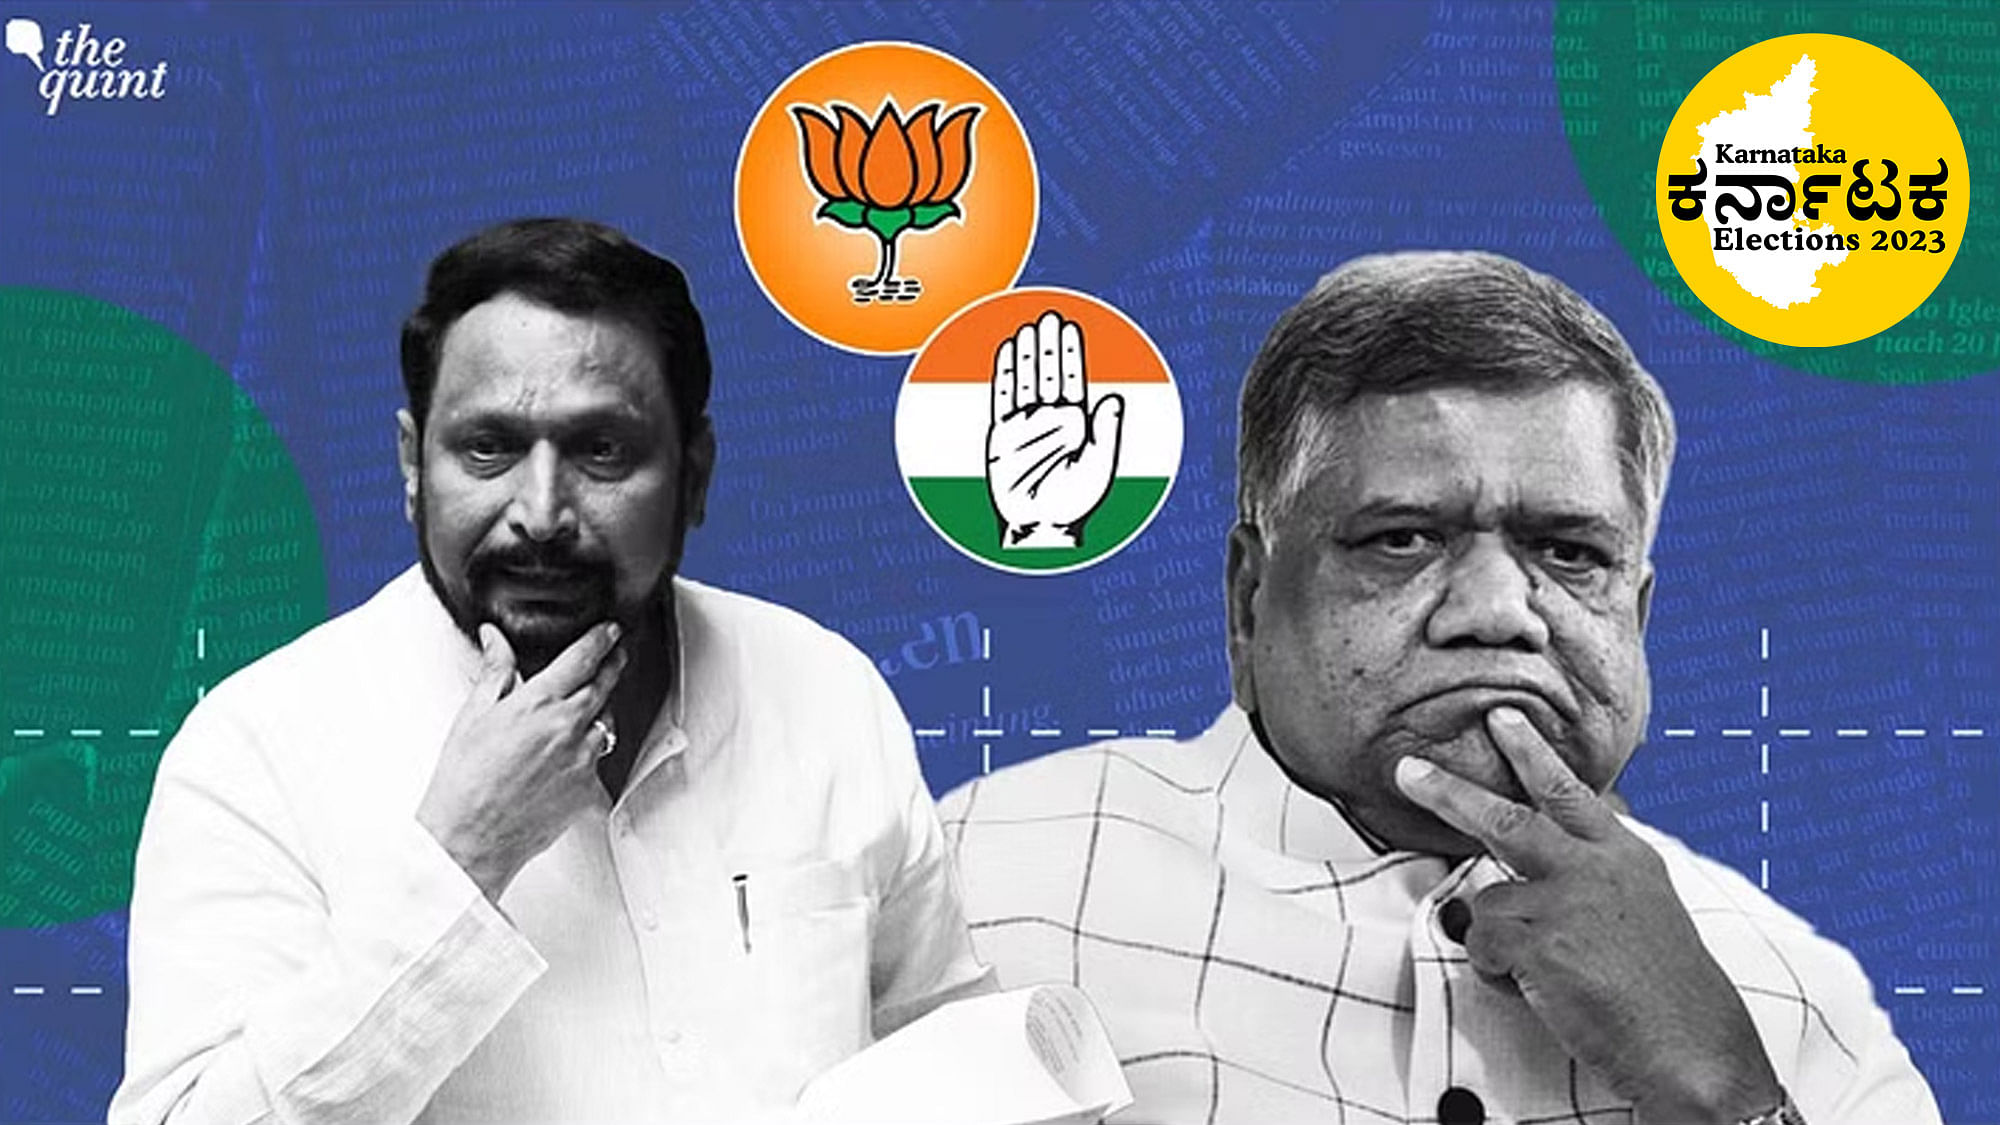 <div class="paragraphs"><p>(Former Karnataka CM Jagadish Shettar and former deputy CM Laxman Savadi have quit BJP and joined the Congress)</p></div>